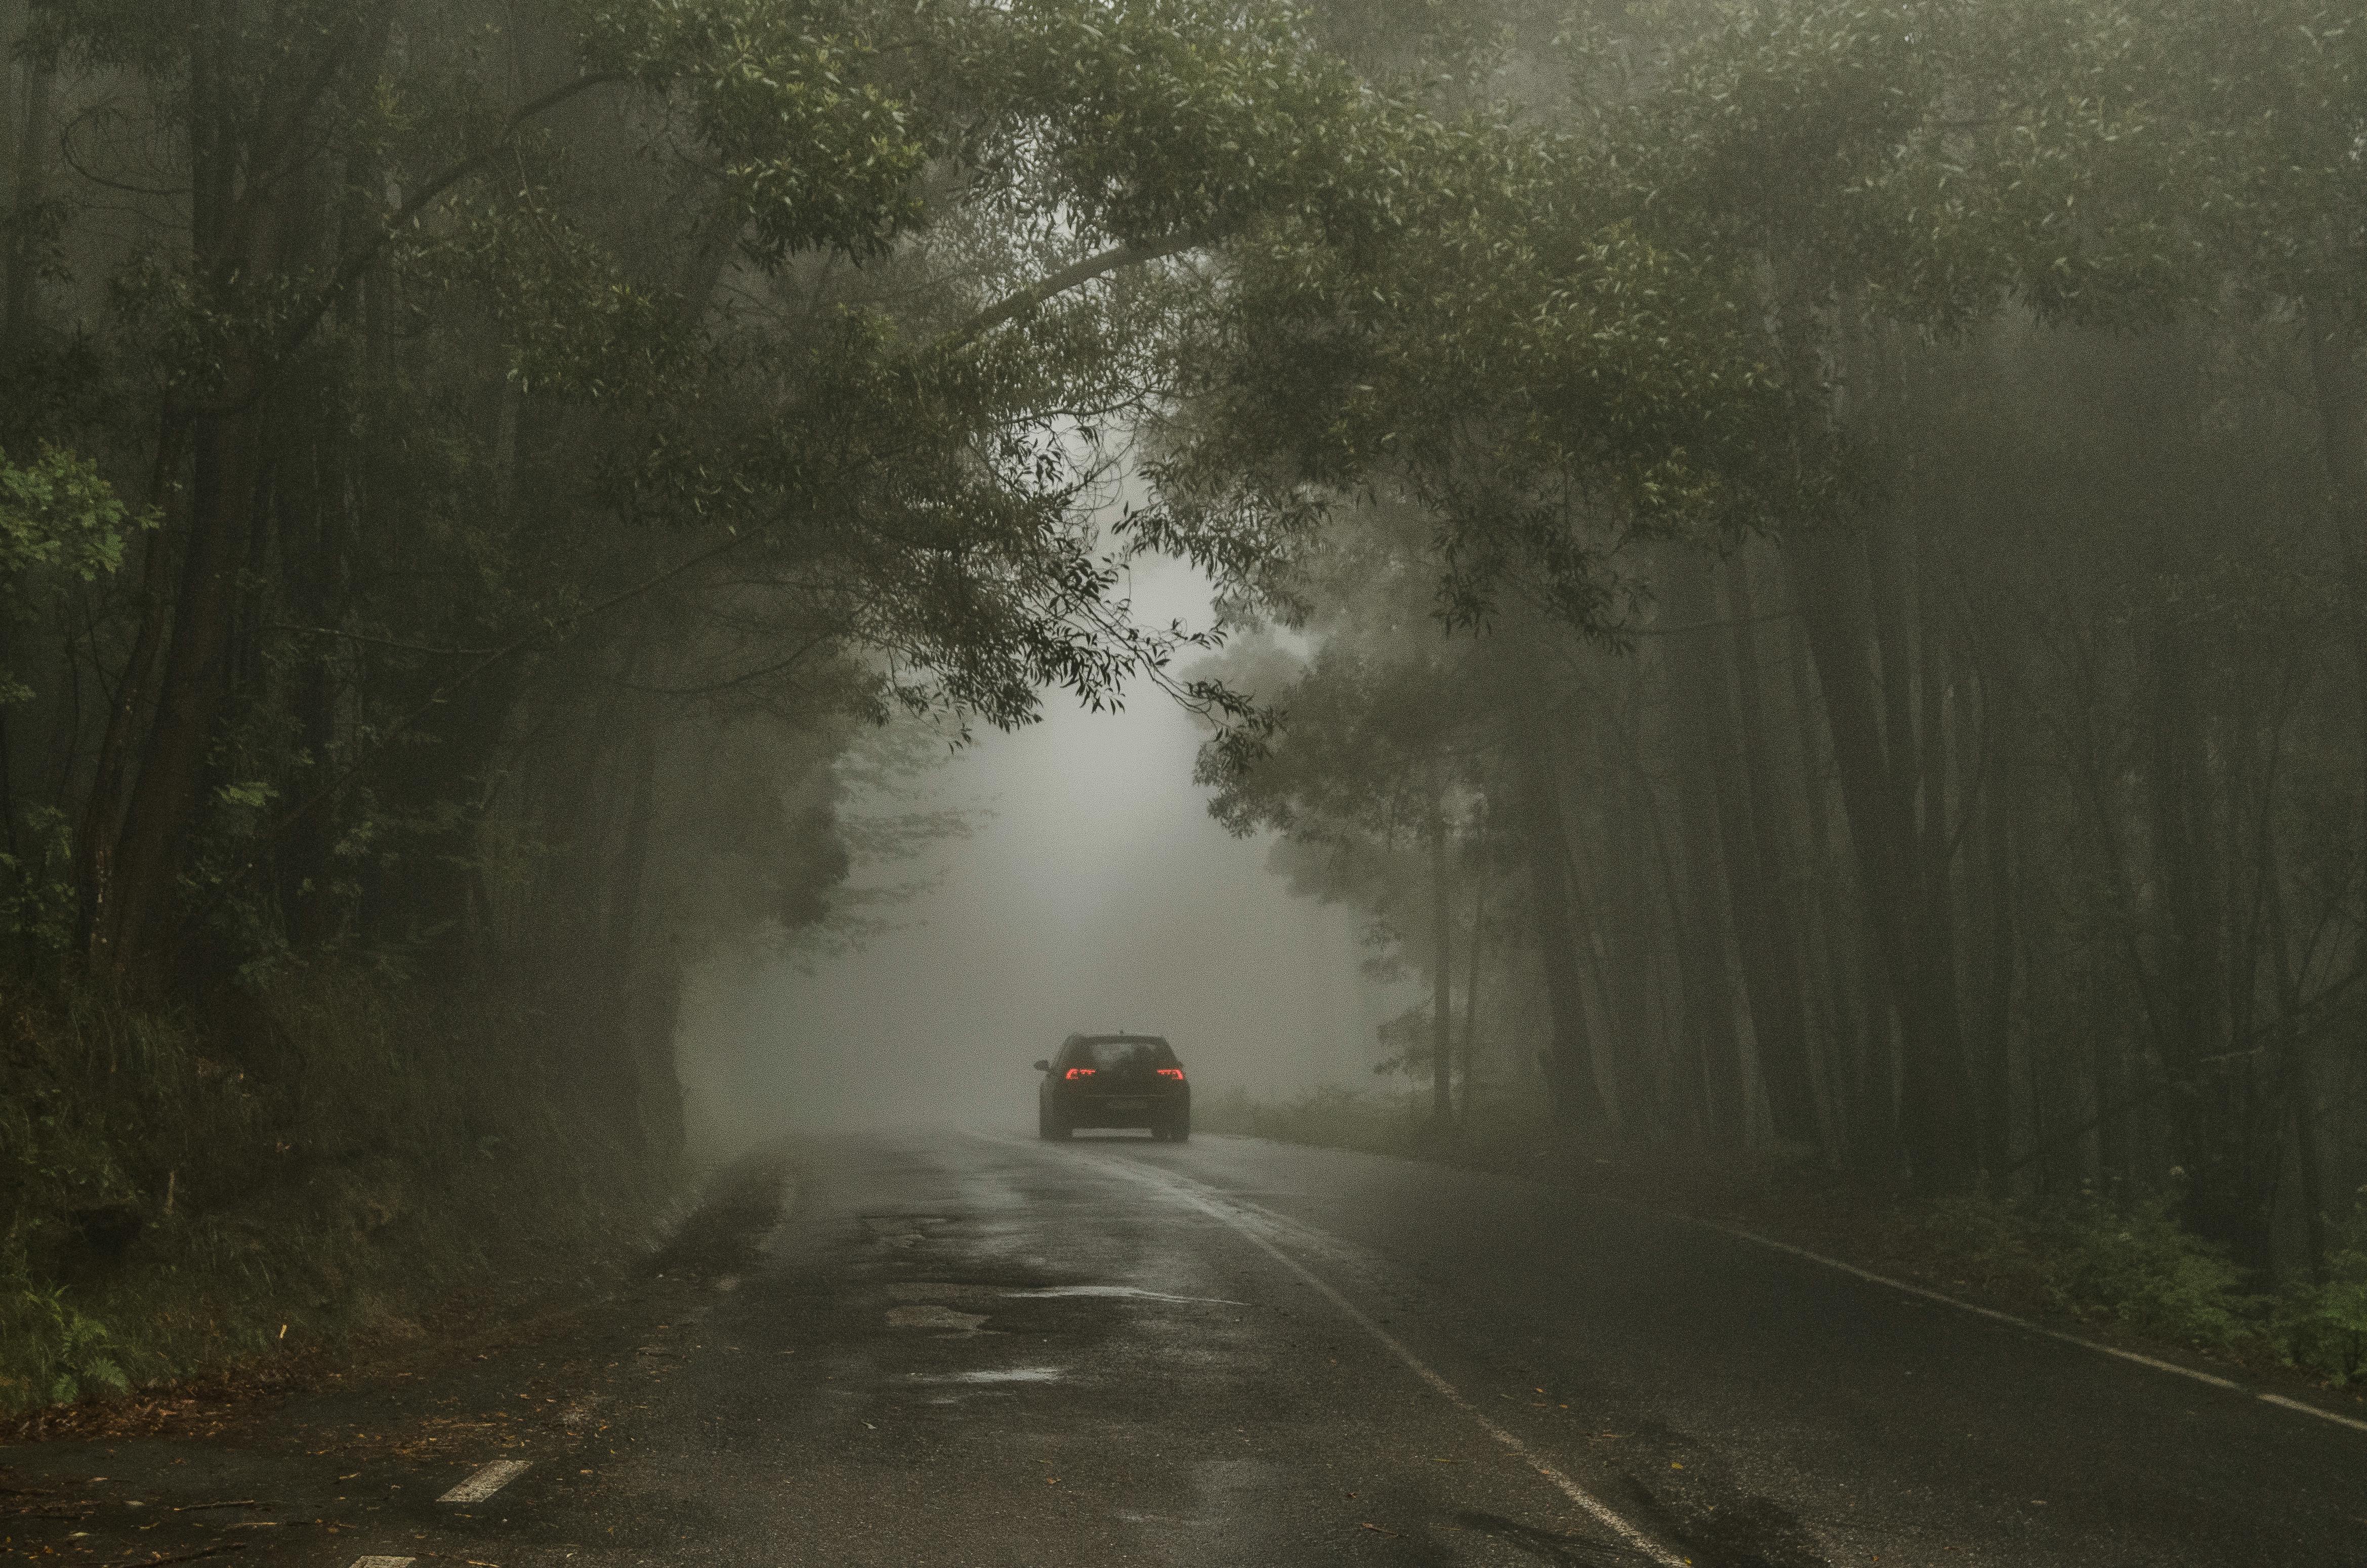 Automóvil atravesando un bosque tormentoso | Foto: Pexels